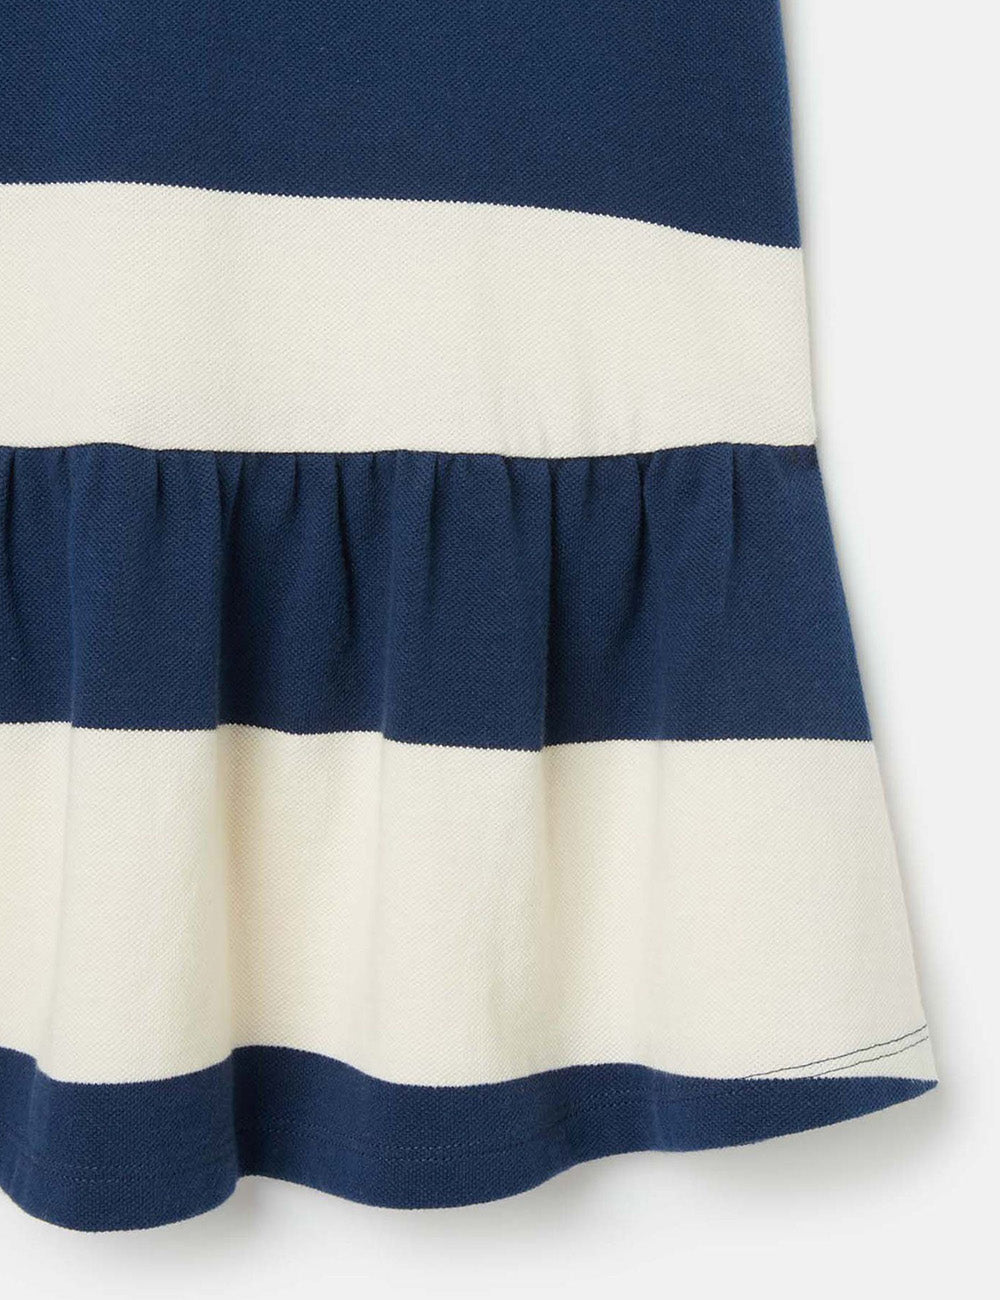 Joules Orla Polo Dress - Navy/Cream Stripe